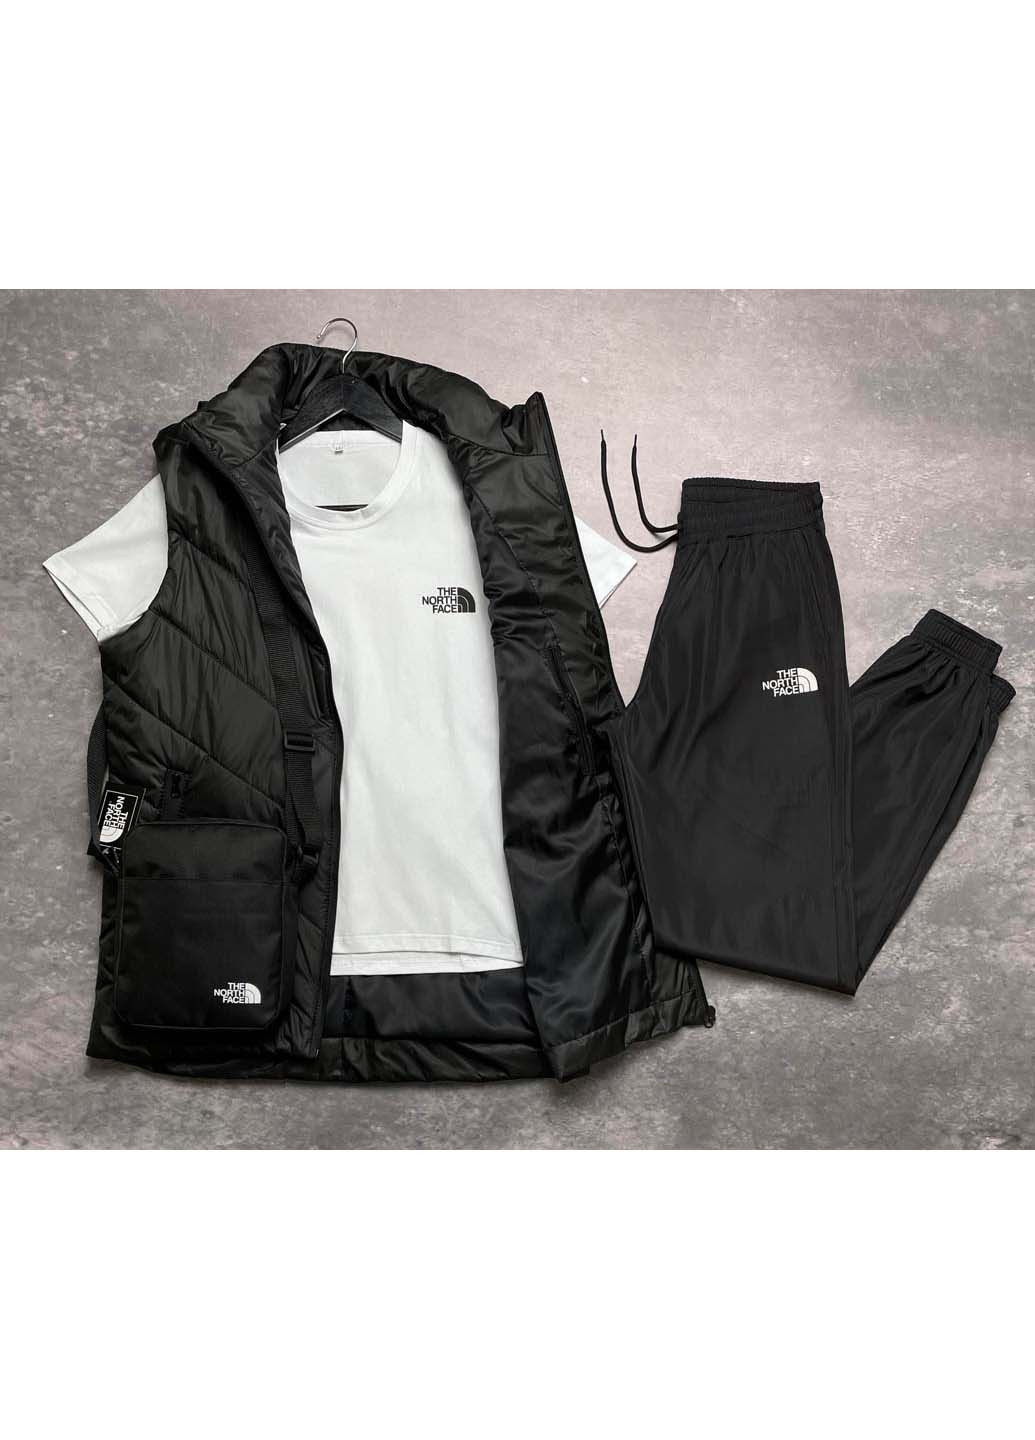 Чорно-білий демісезонний комплект clip жилетка + футболка та штани president + барсетка The North Face